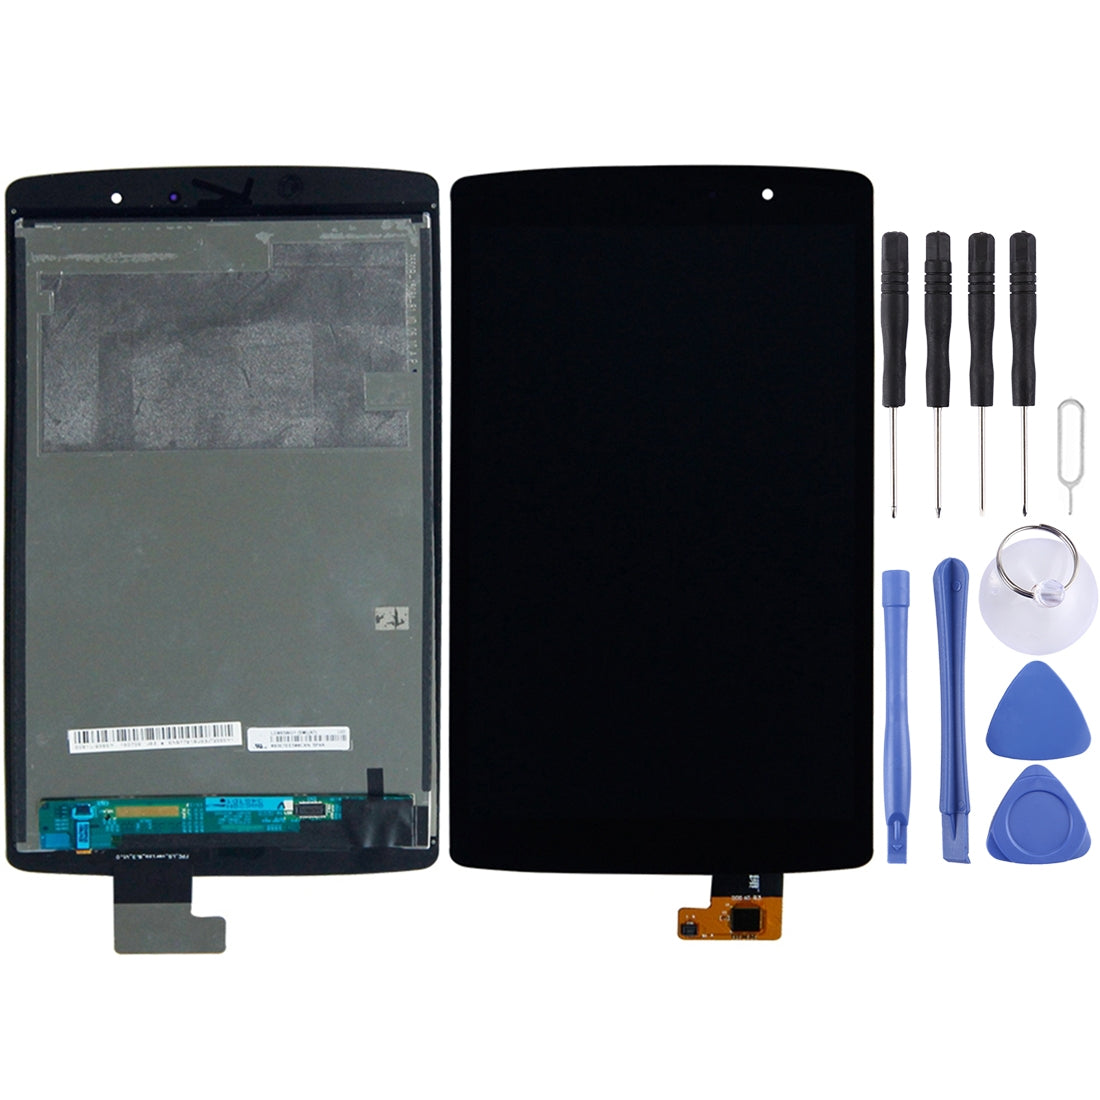 Pantalla LCD + Tactil Digitalizador LG G Pad X 8.3 VK-815 VK815